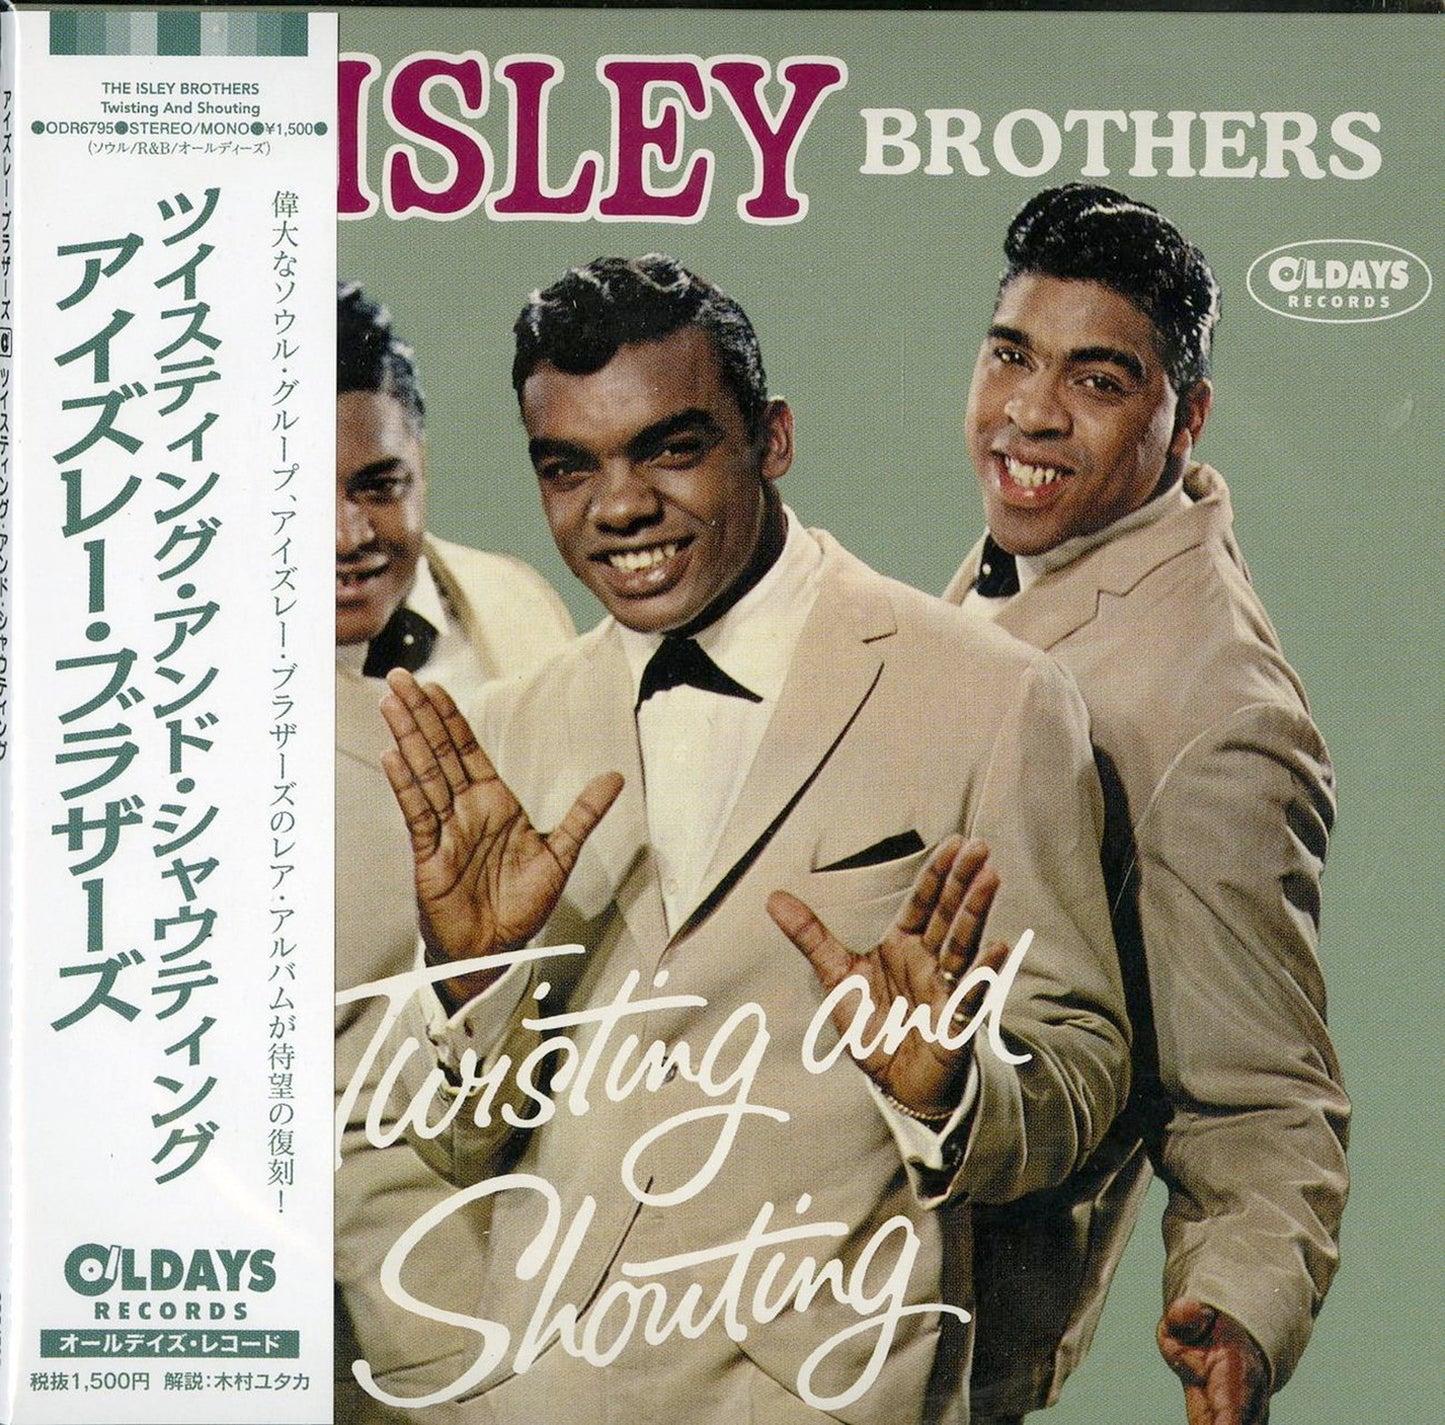 The Isley Brothers - Twisting And Shouting - Japan  Mini LP CD Bonus Track